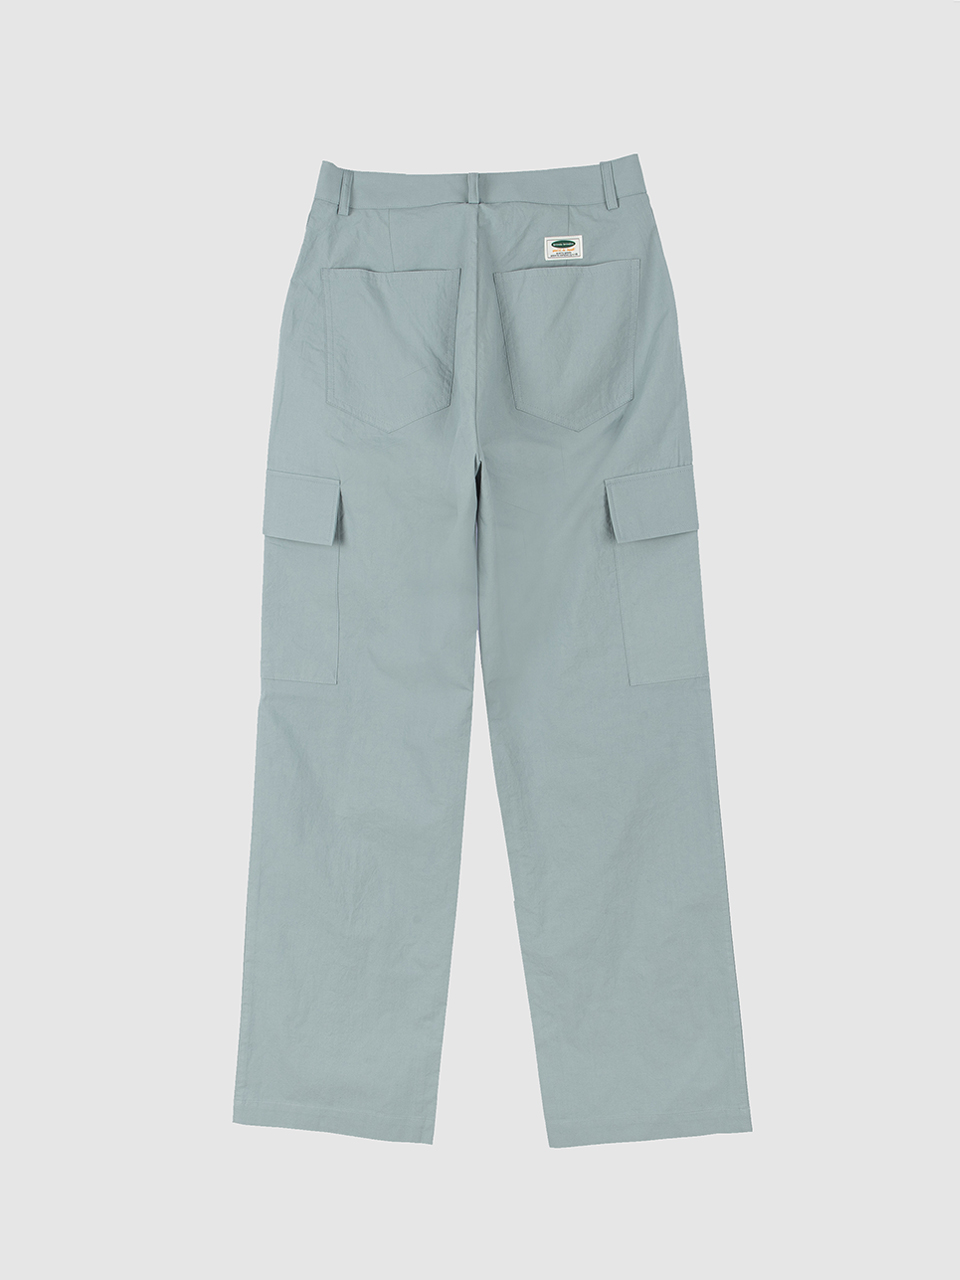 4th / forest cargo pants - middle blueBRENDA BRENDEN